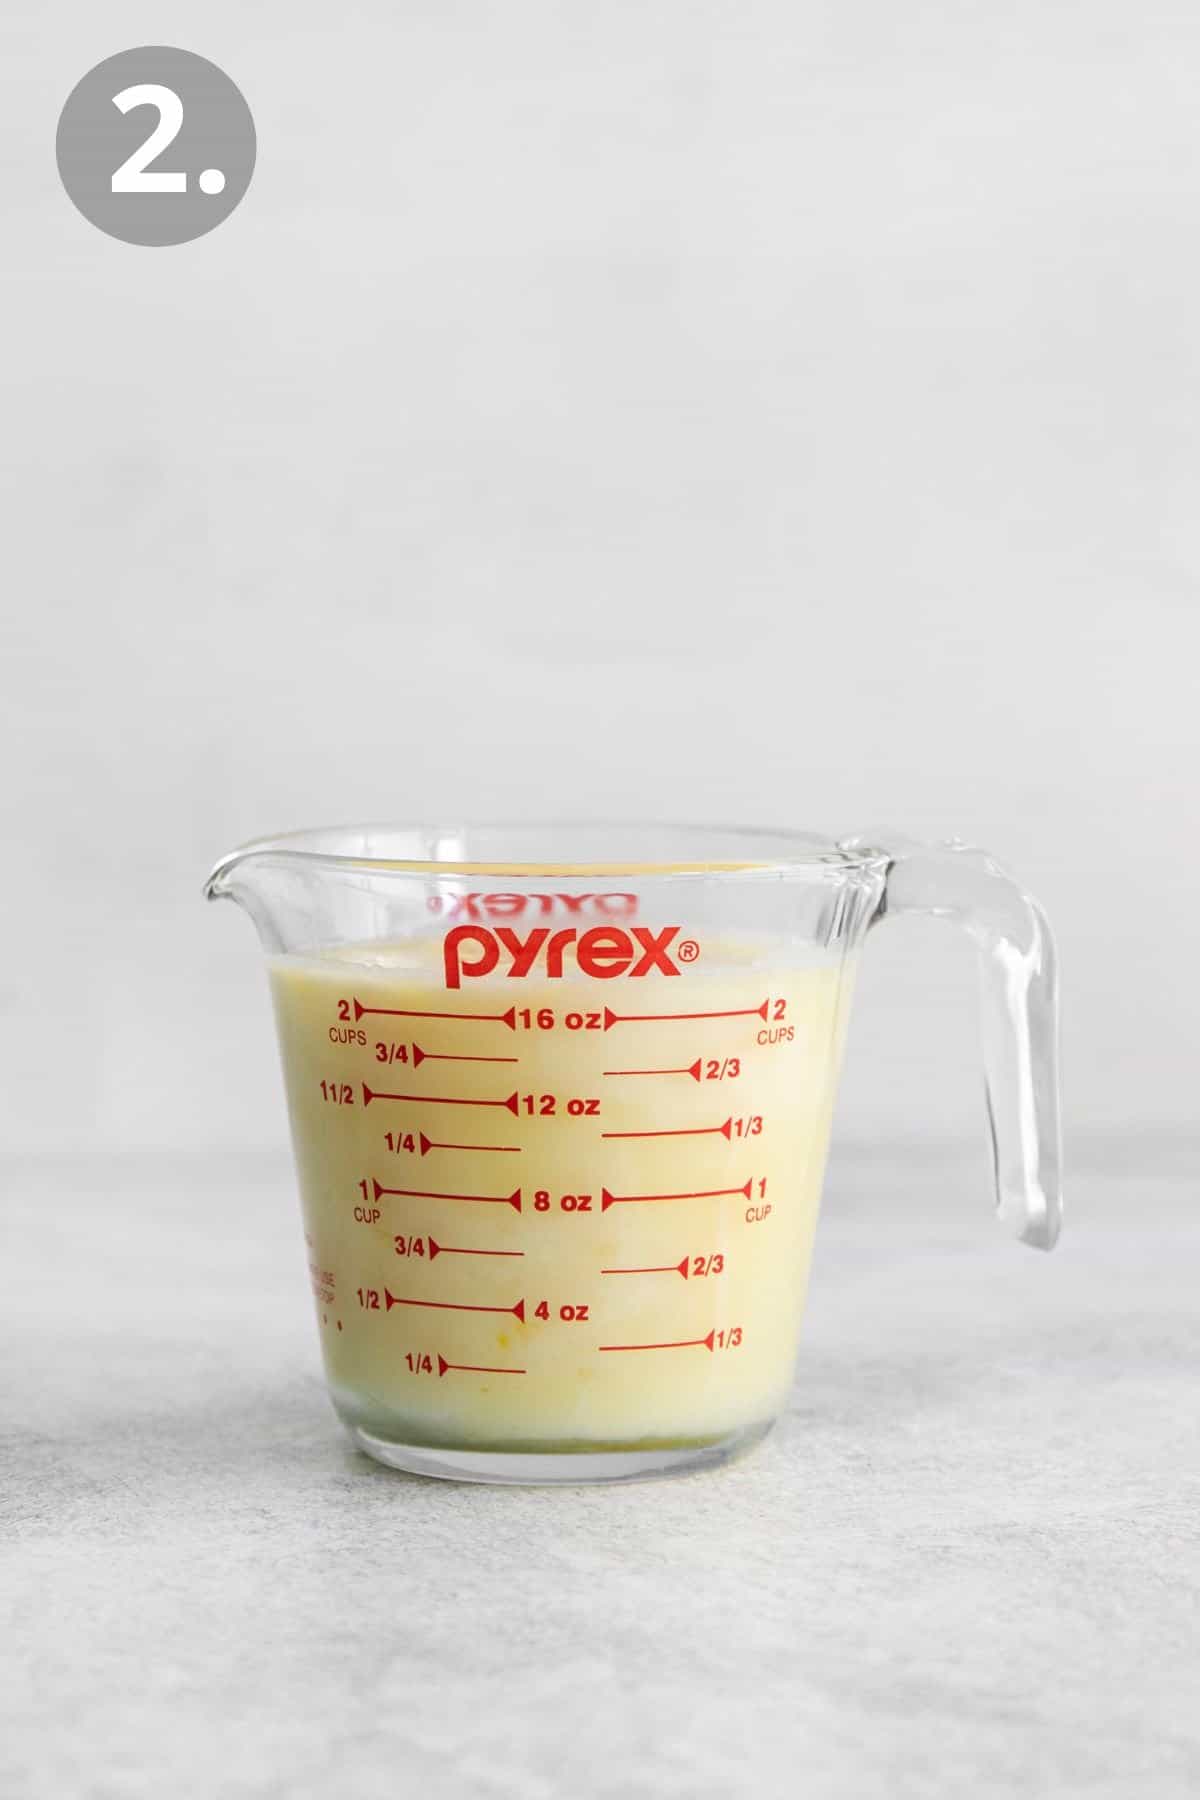 Lemon posset ingredients in a Pyrex measuring cup